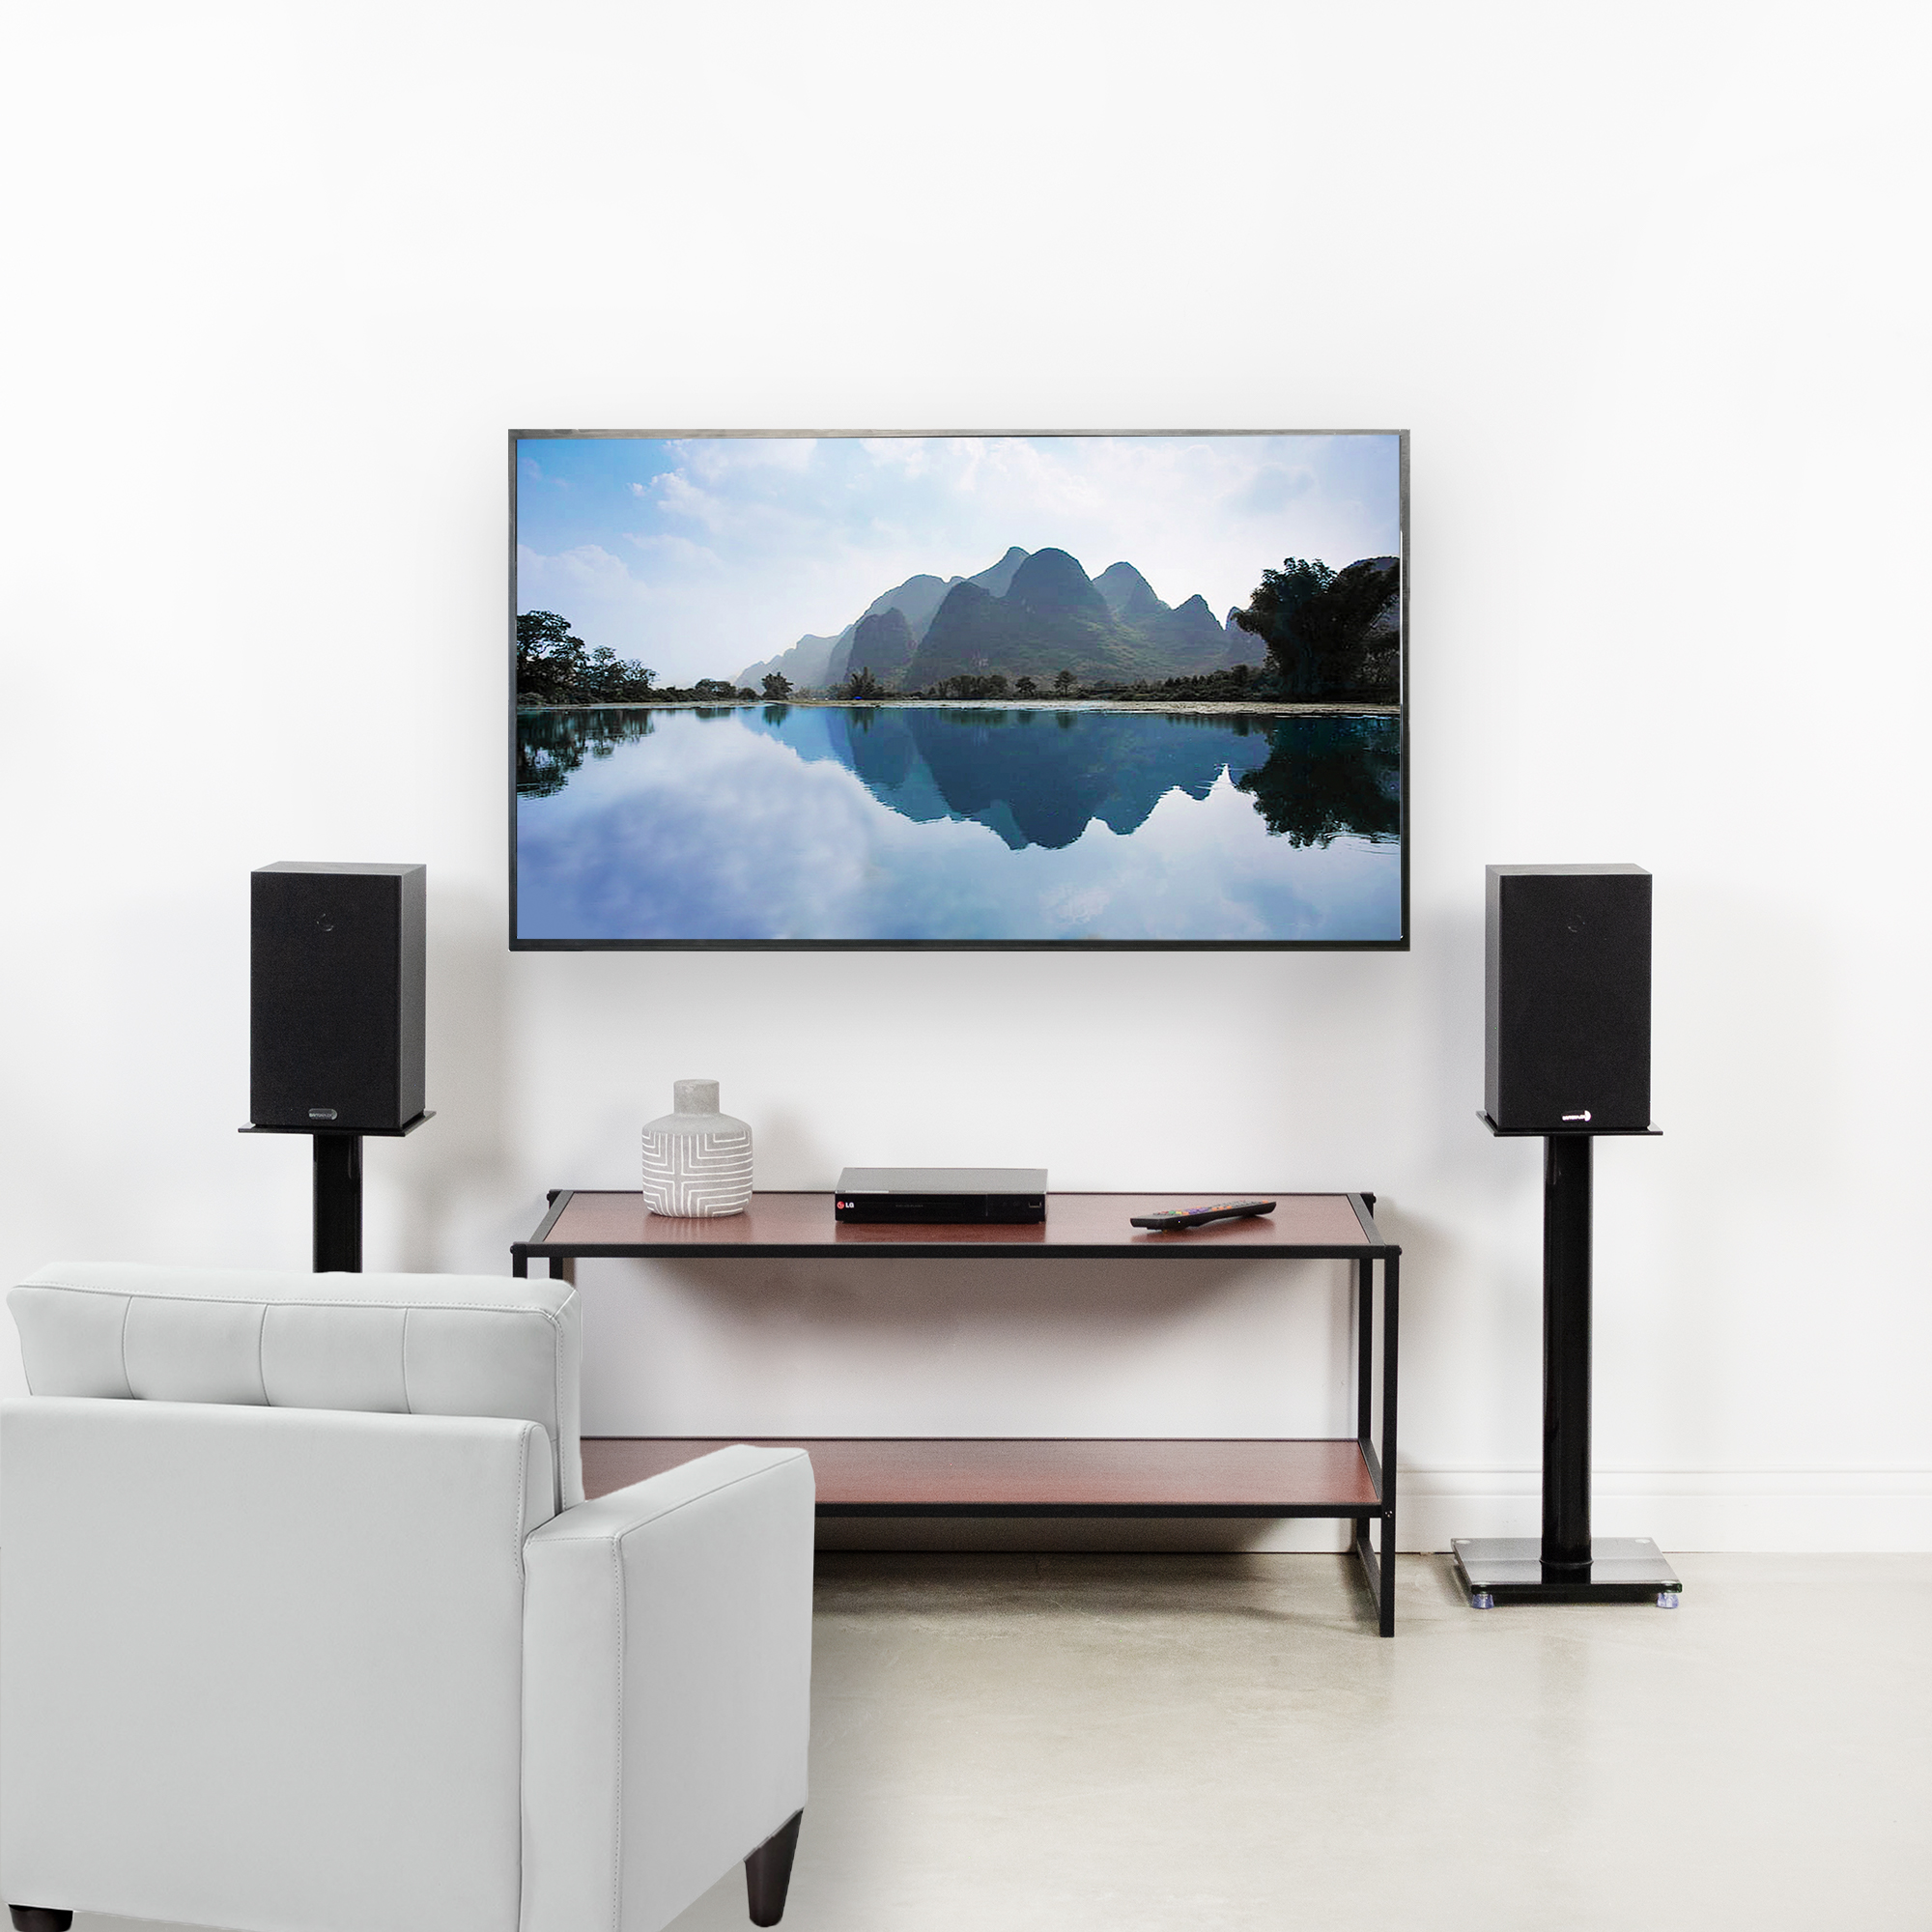 Premium Universal Floor Speaker Stands for Surround Sound & Book Shelf Speakers - image 5 of 6